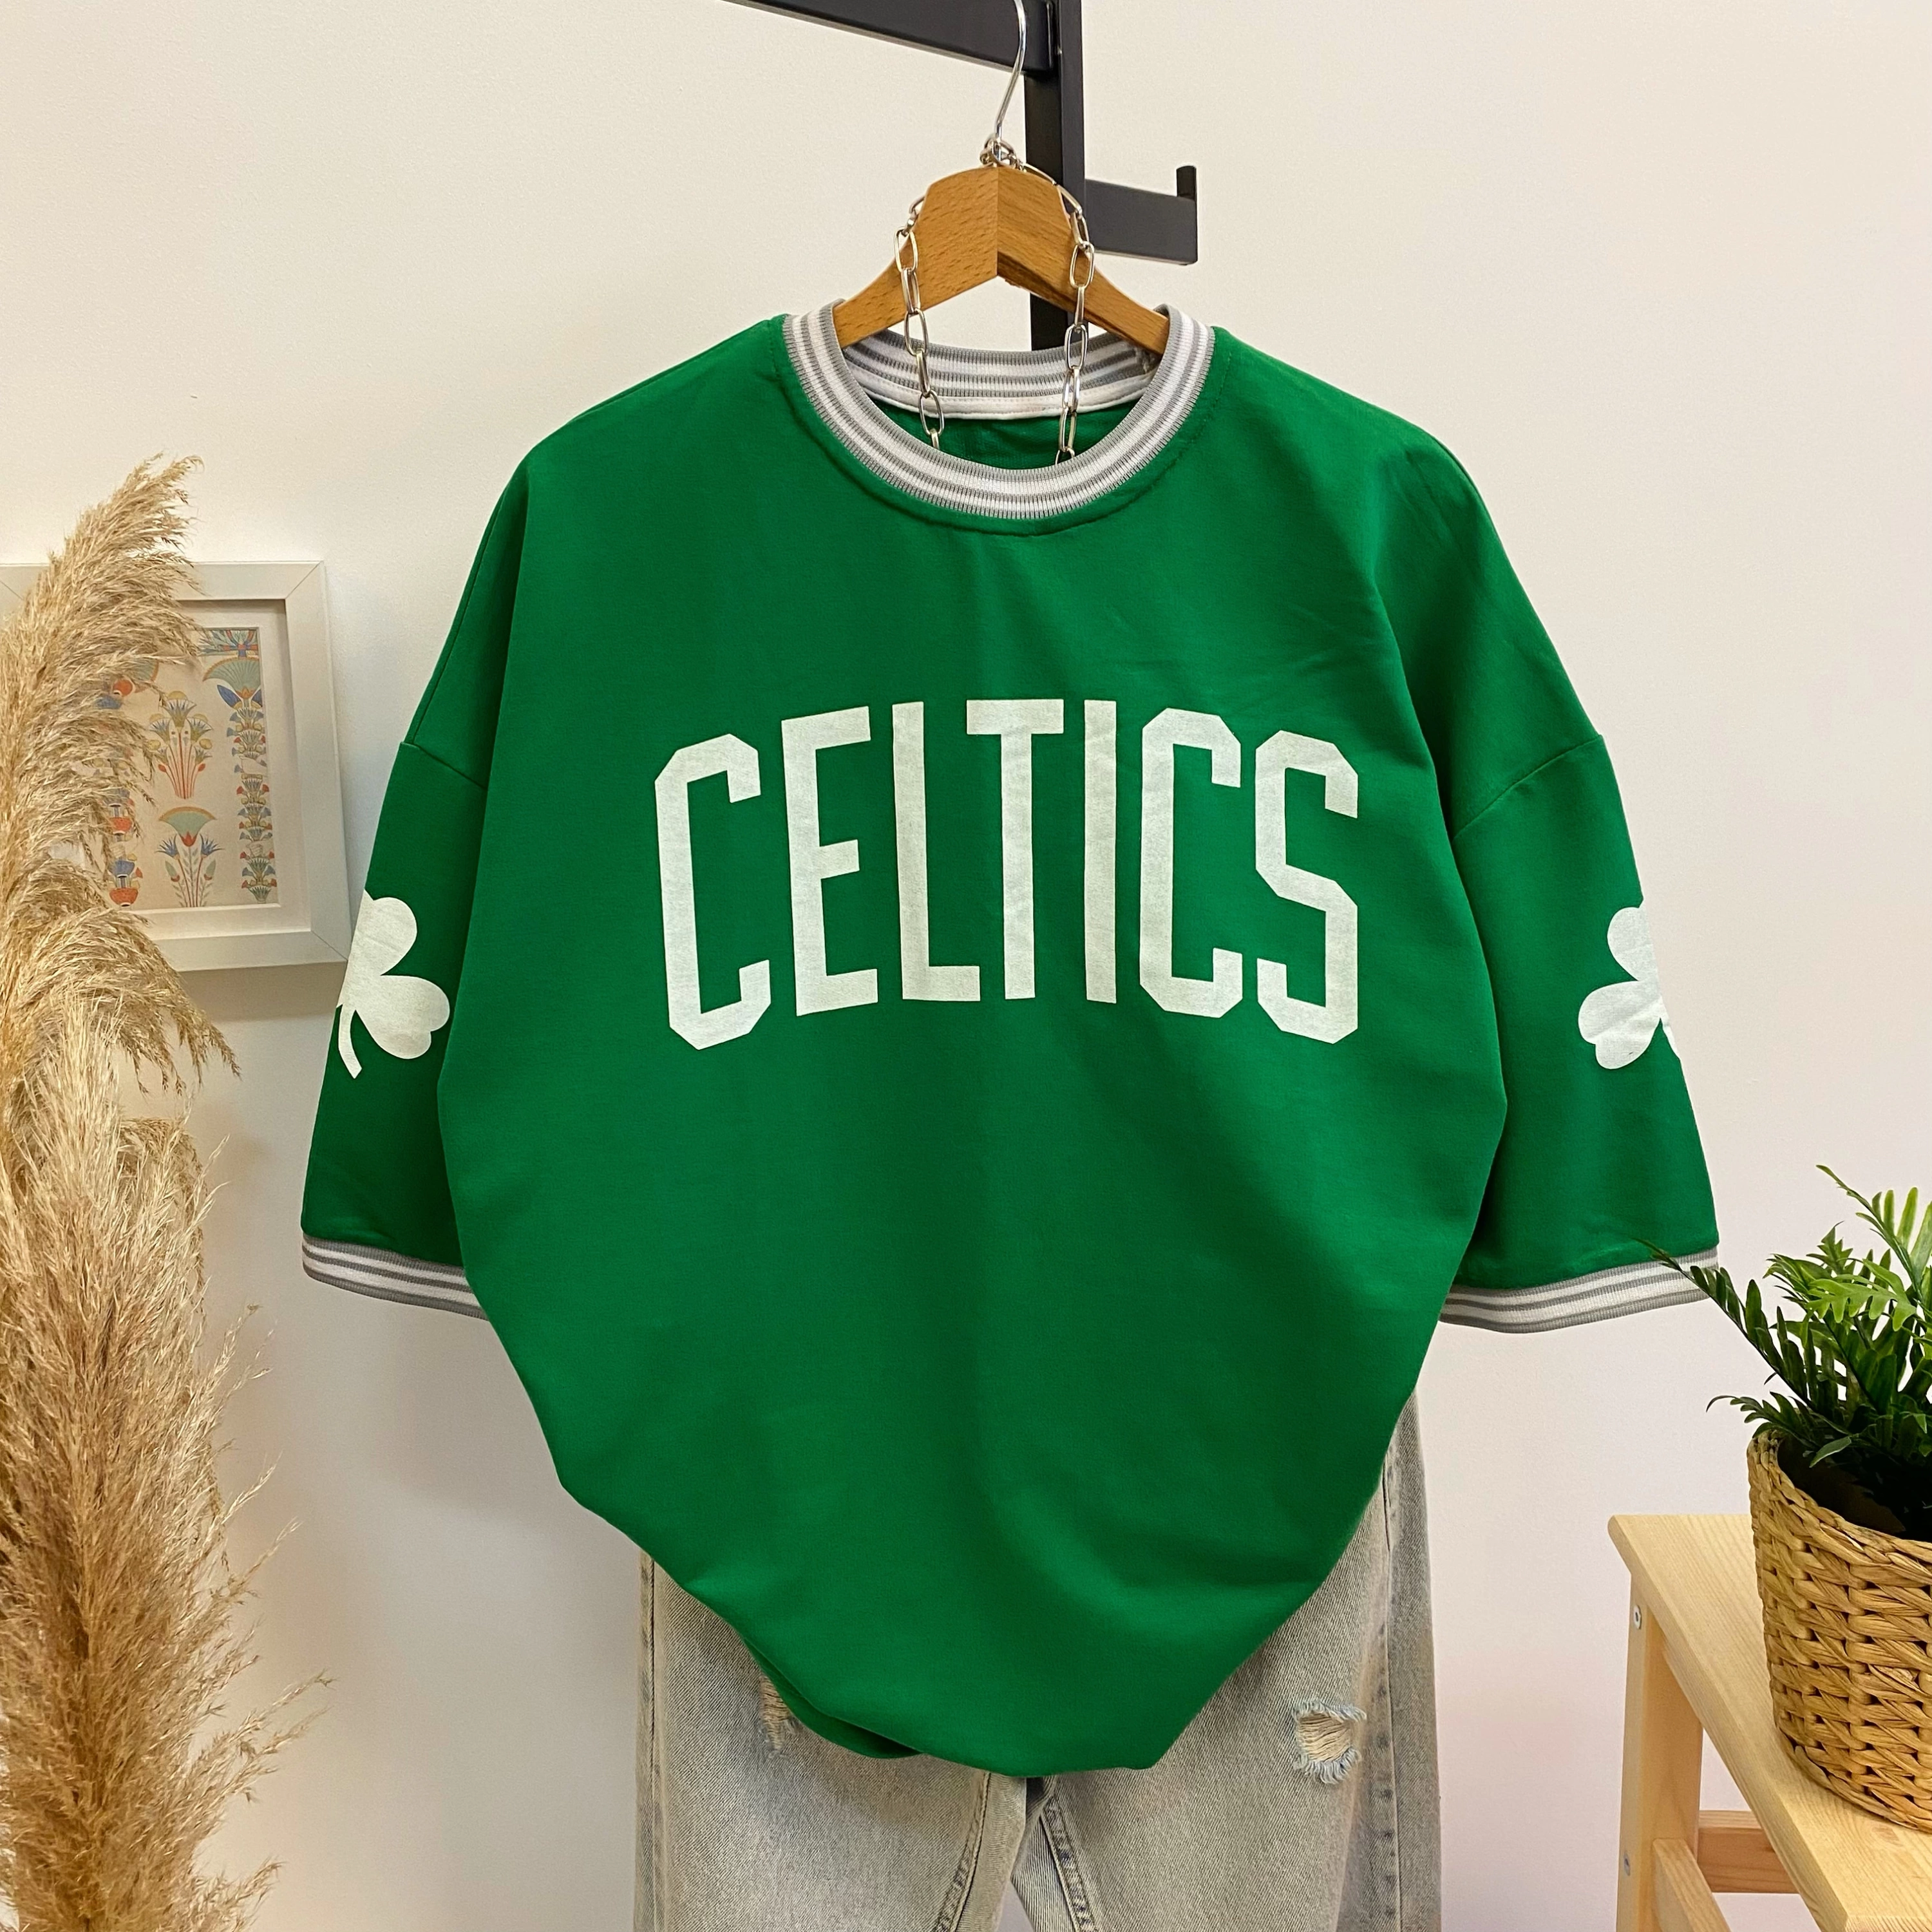 Celtics oversize t-shirt